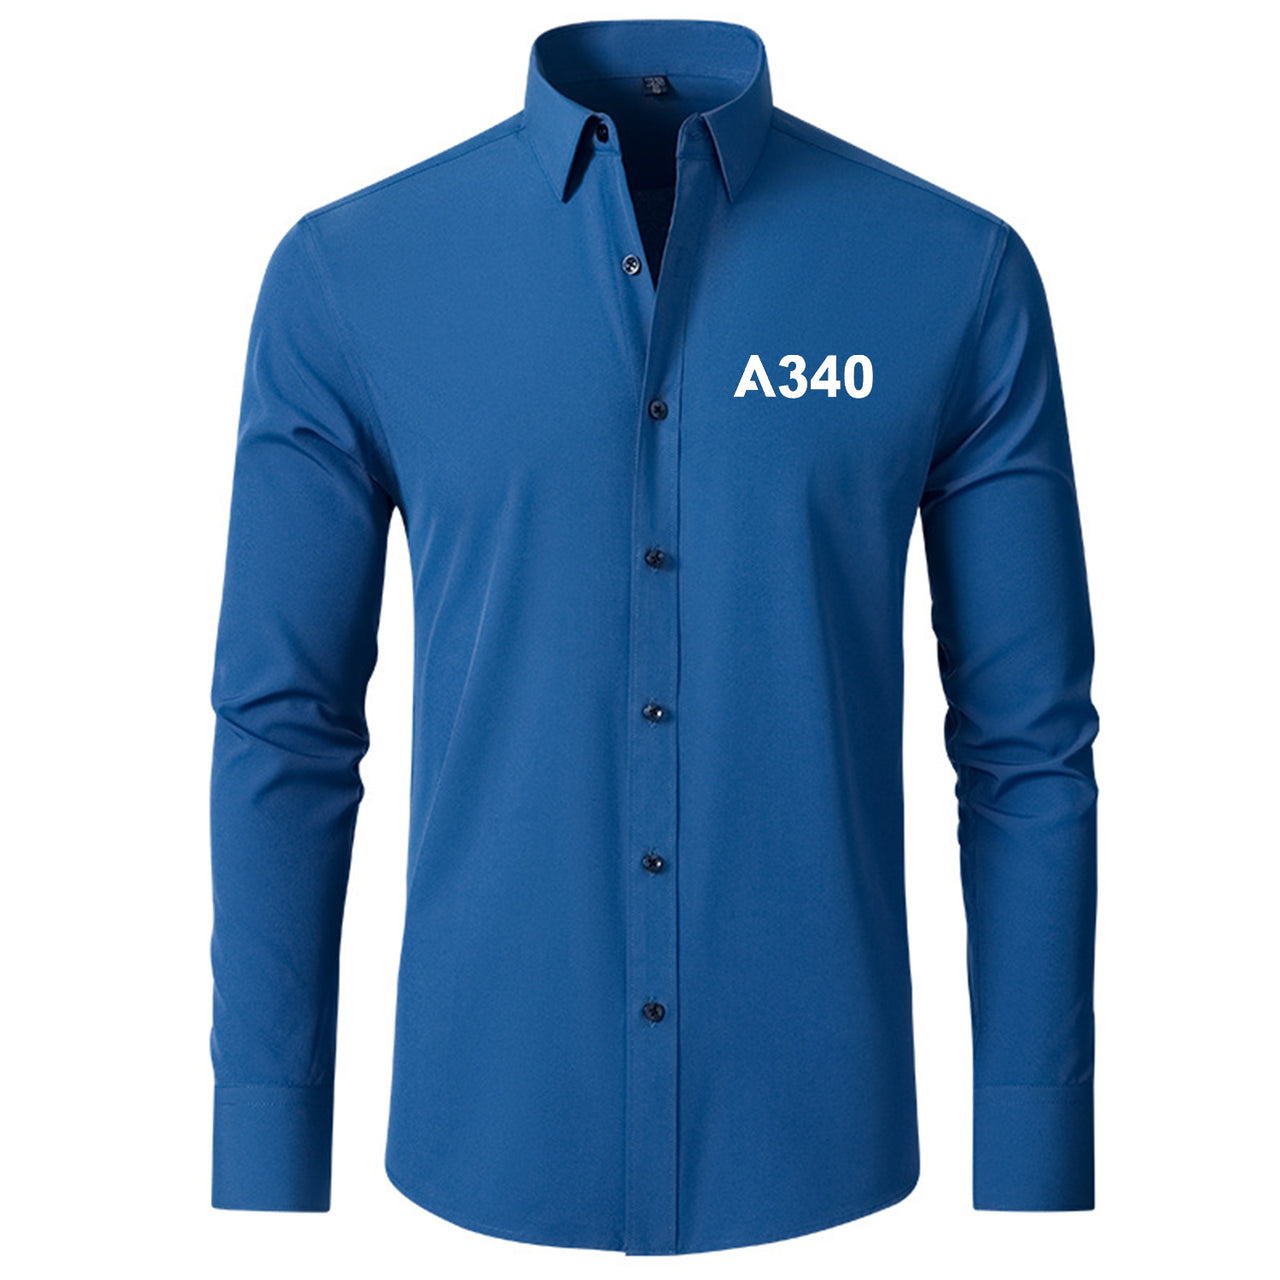 A340 Flat Text Designed Long Sleeve Shirts